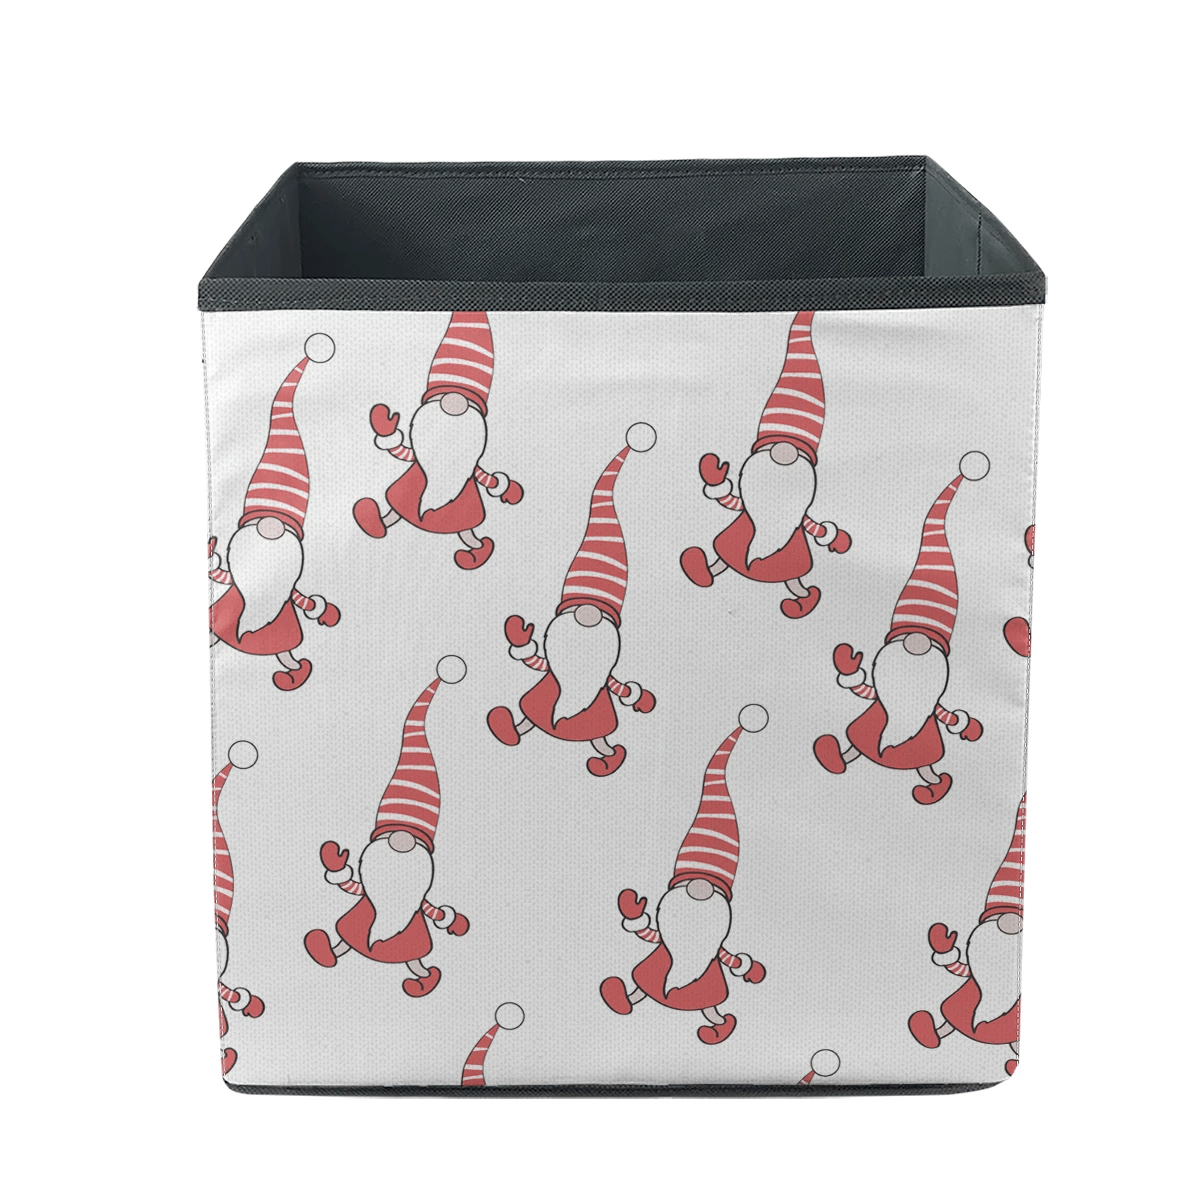 Friendly Gnome Santa Claus On White Background Storage Bin Storage Cube